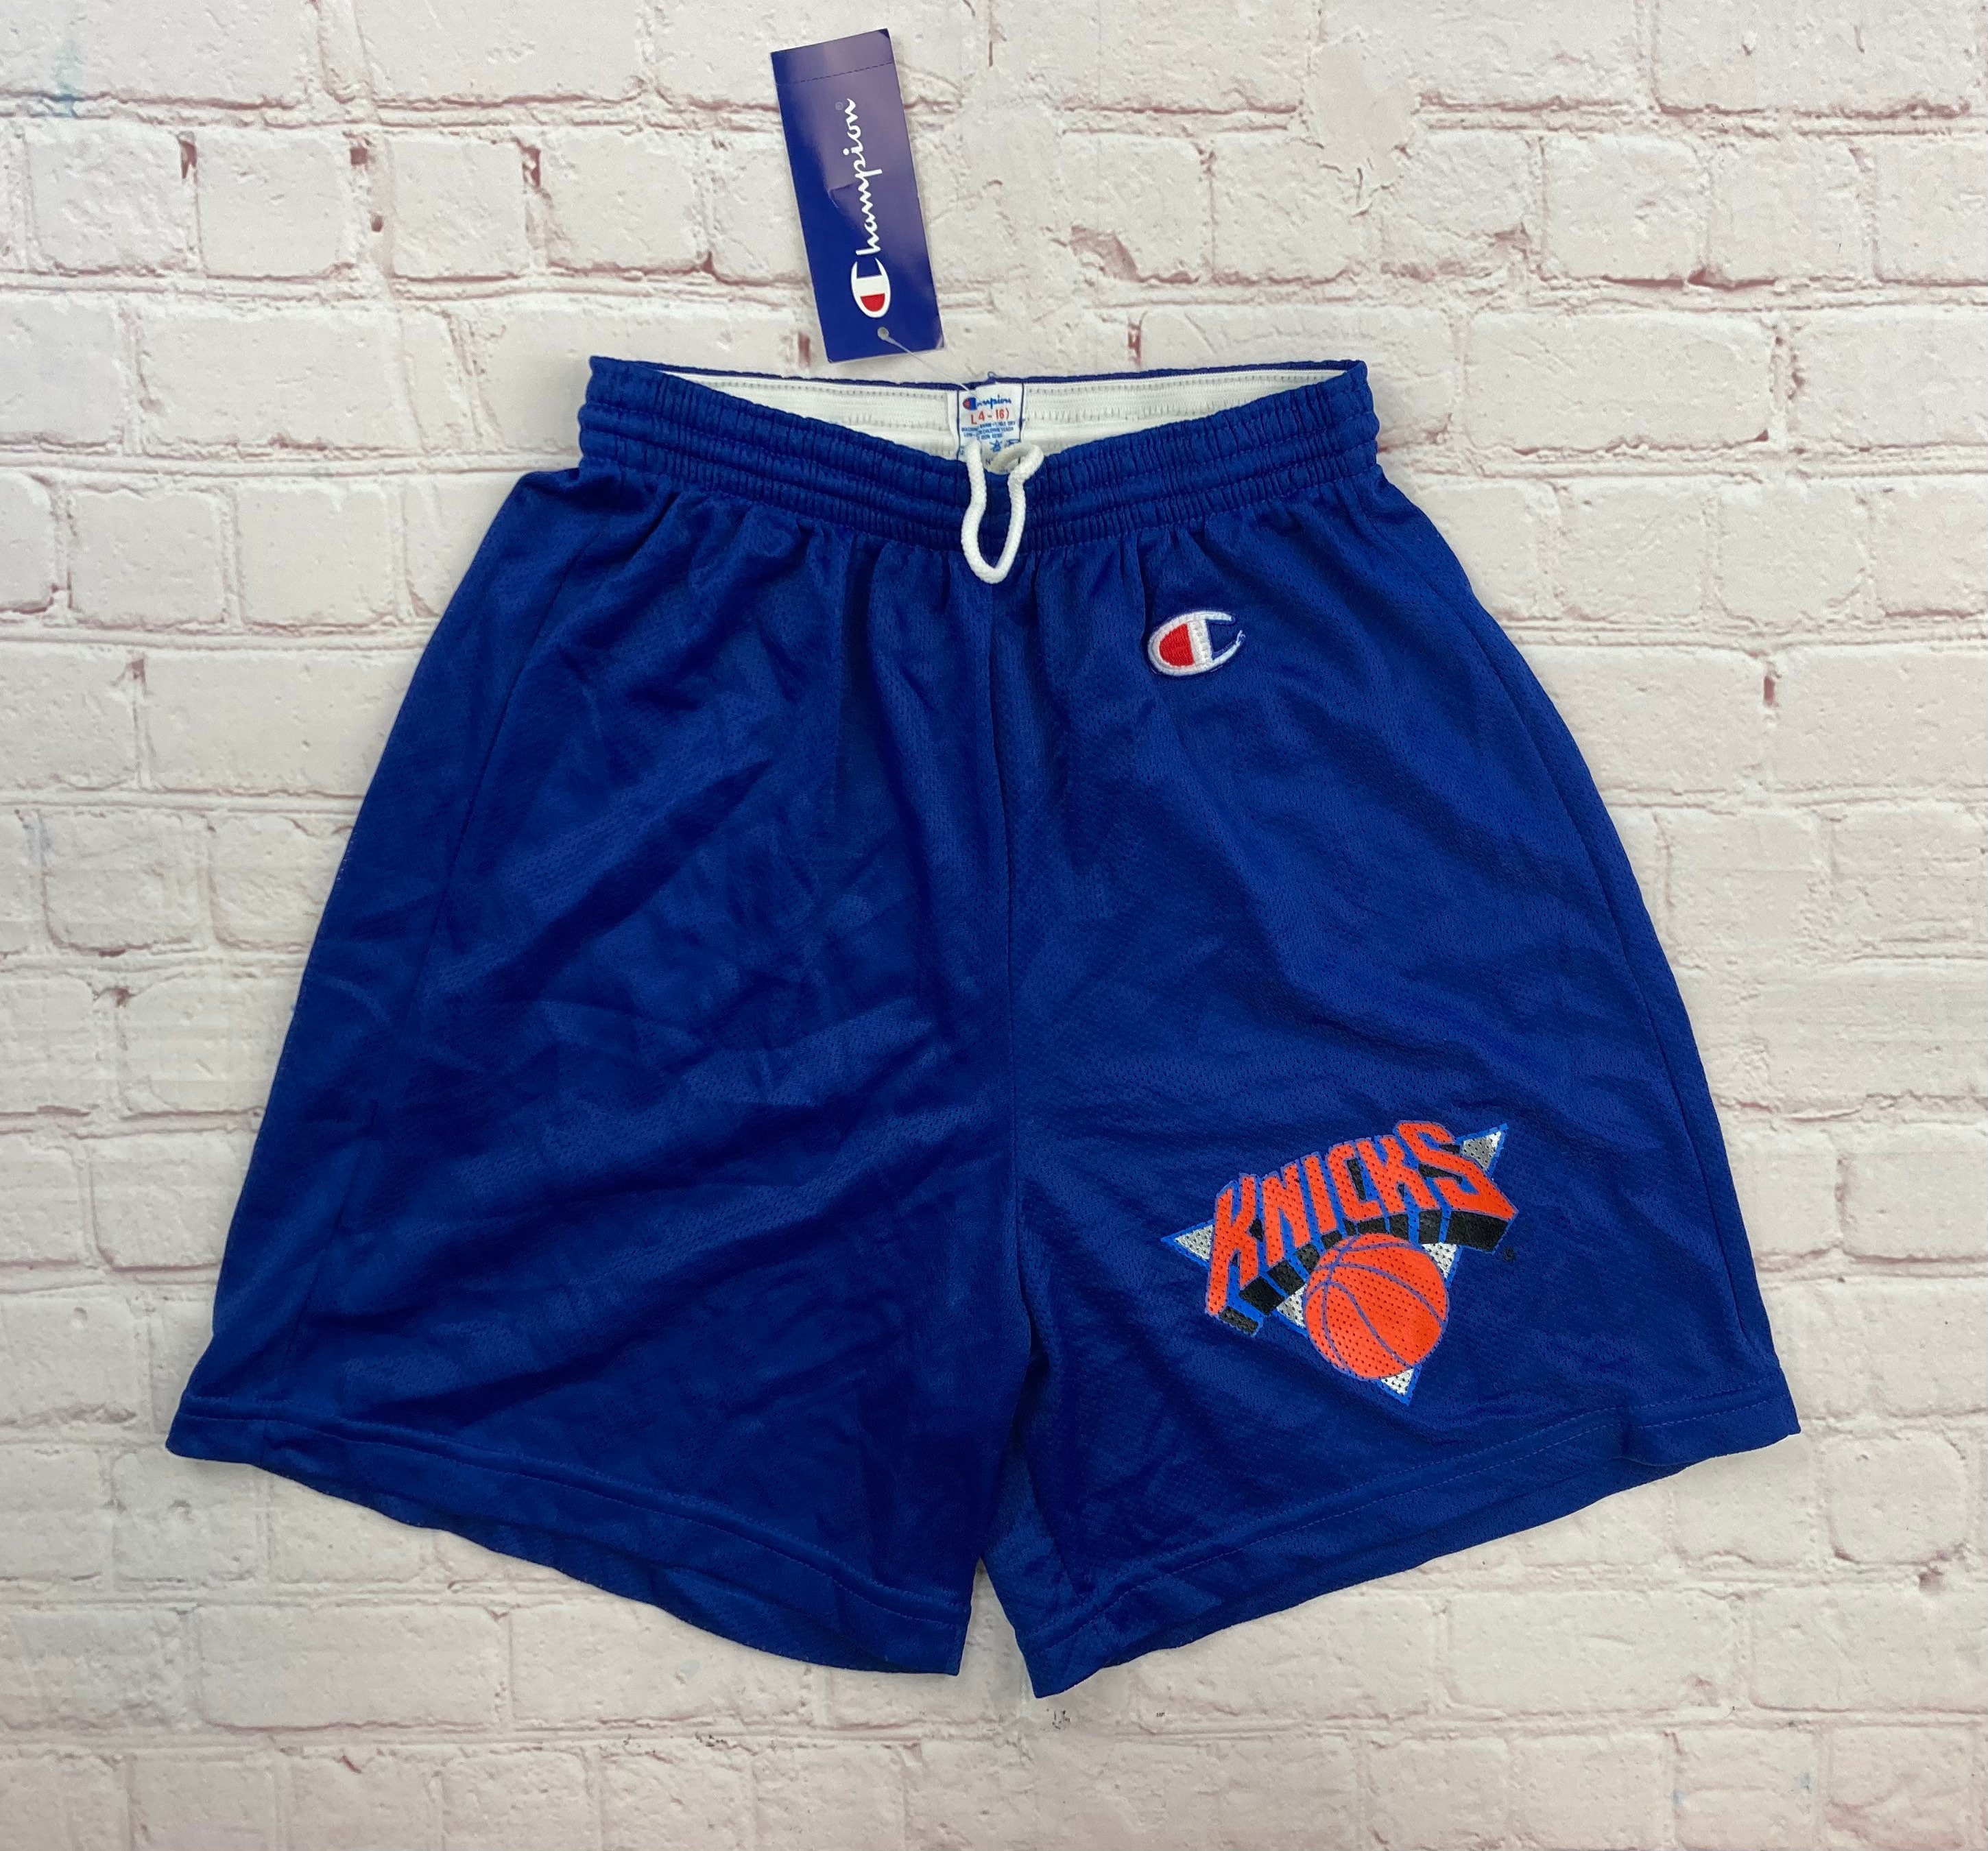 NBA New York Knicks Youth Small Shorts NWT MSRP $35